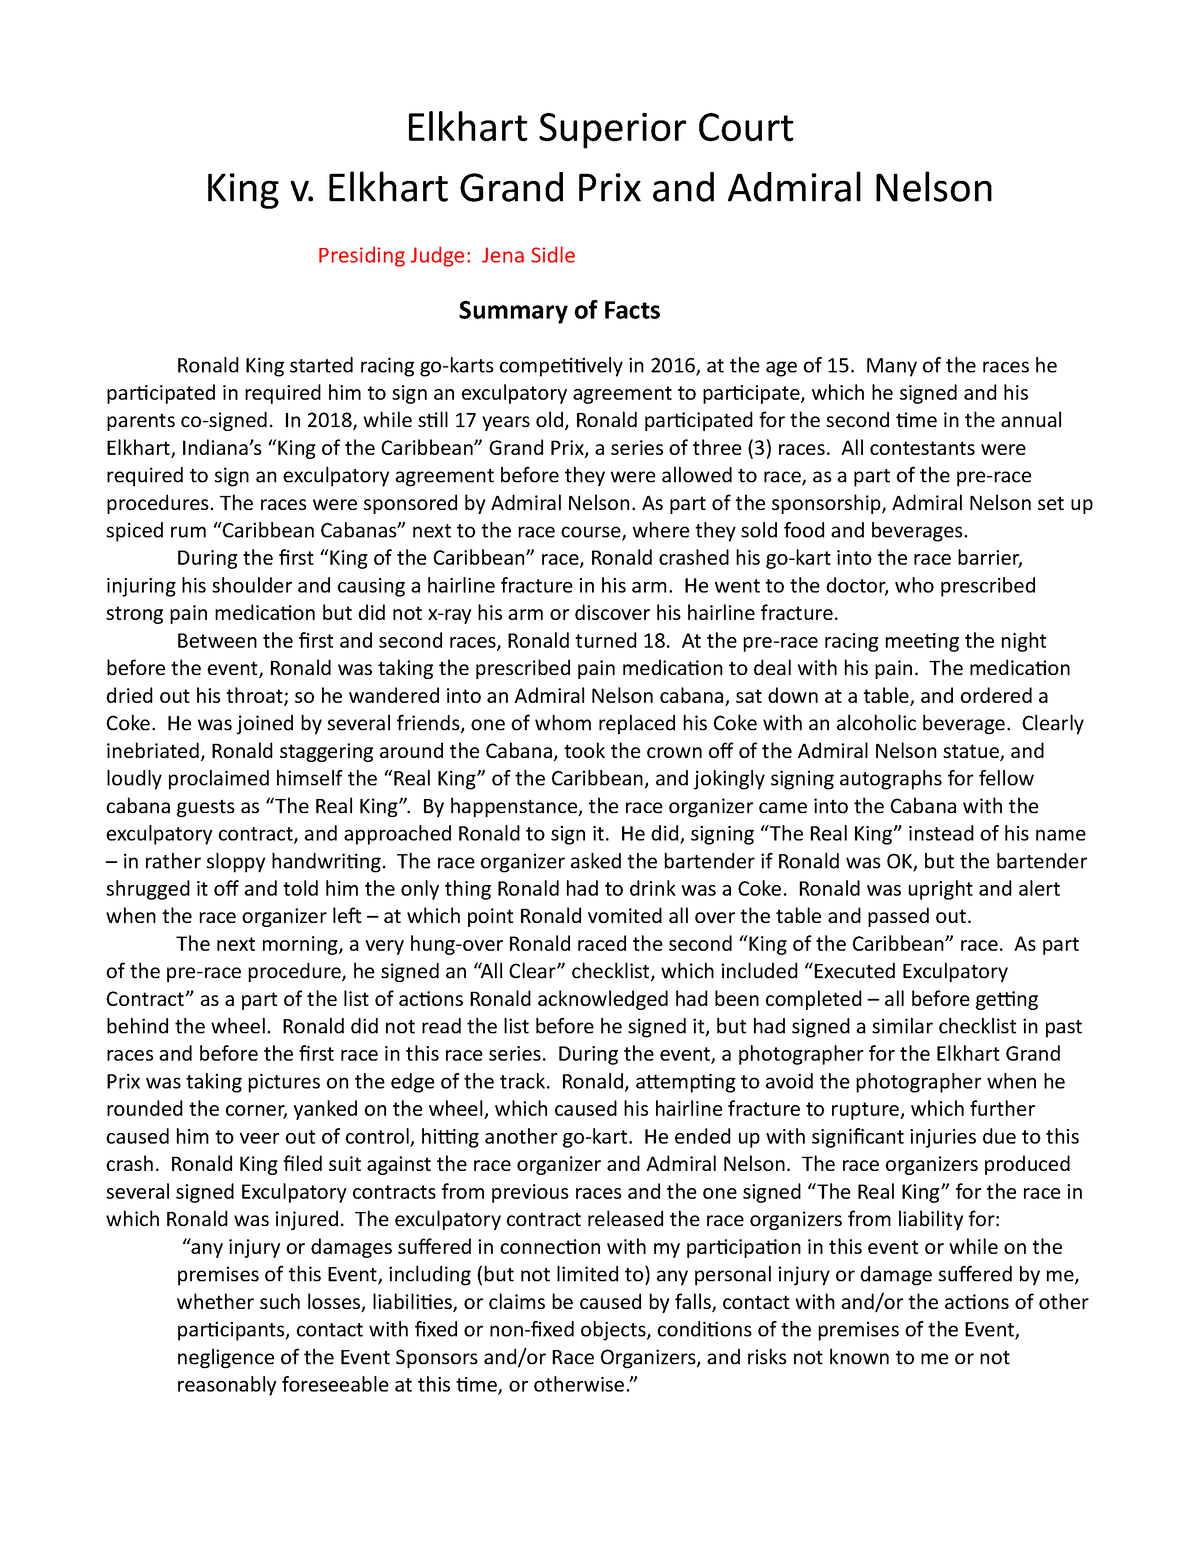 Brief for Jury Decisions For Distribution King v Elkhart Grand